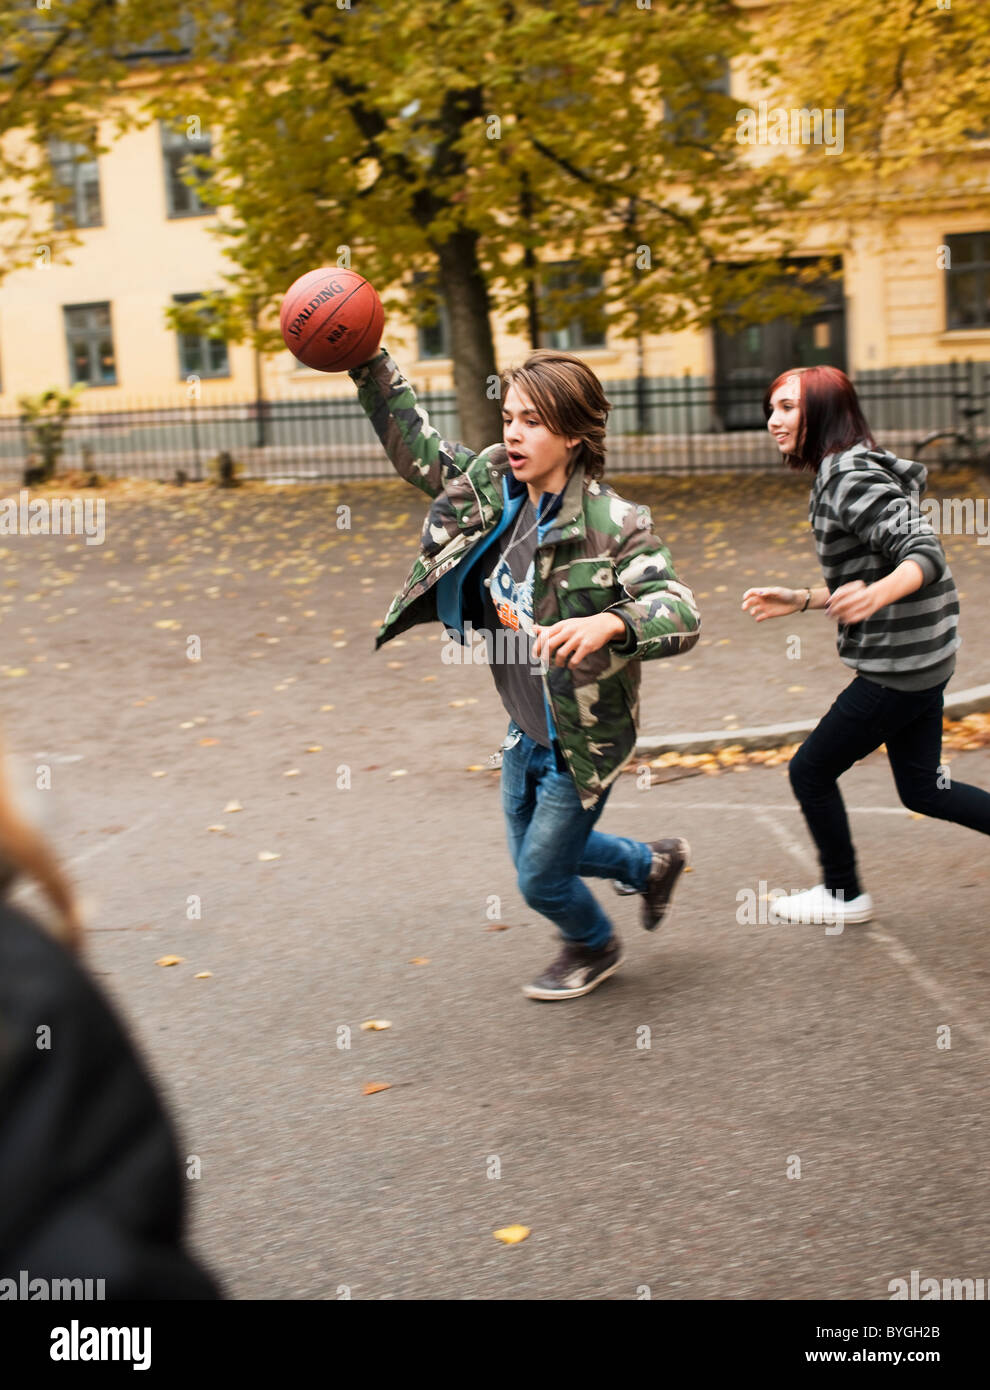 Teenage girls playing basketball in schoolyard Stock Photo